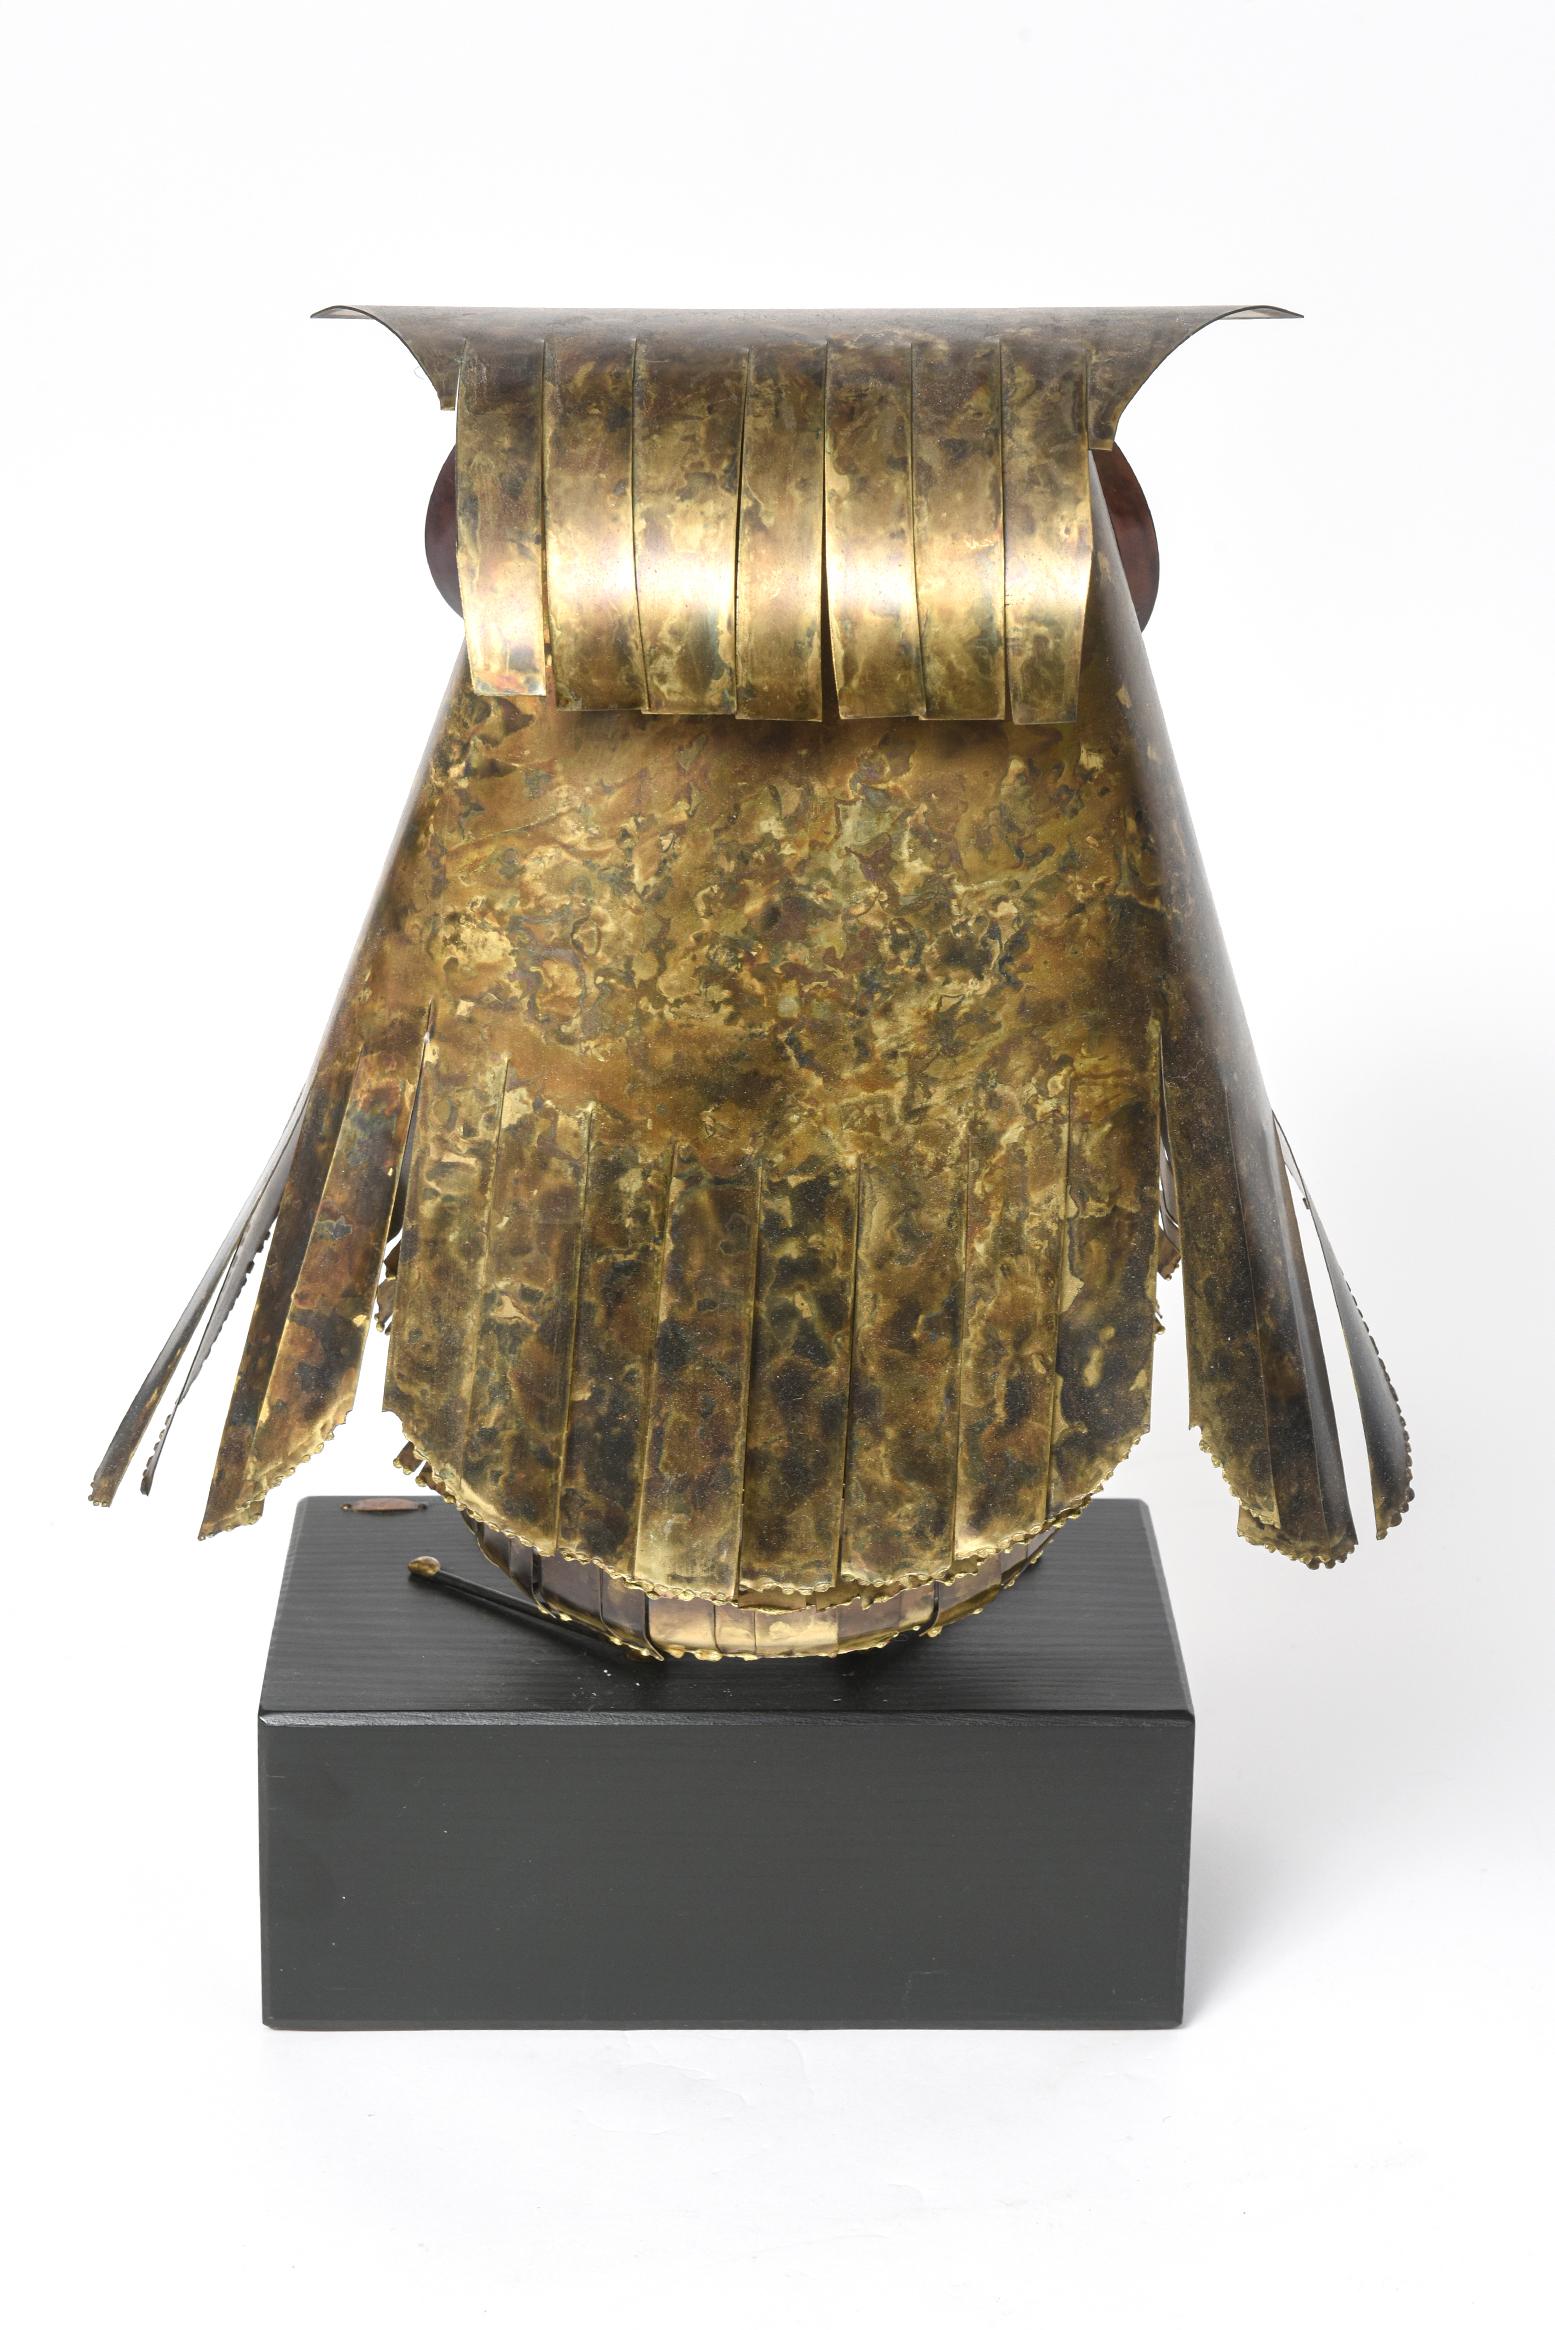 Brutalist Curtis Jere Mid-Century Large Metal Owl Sculpture